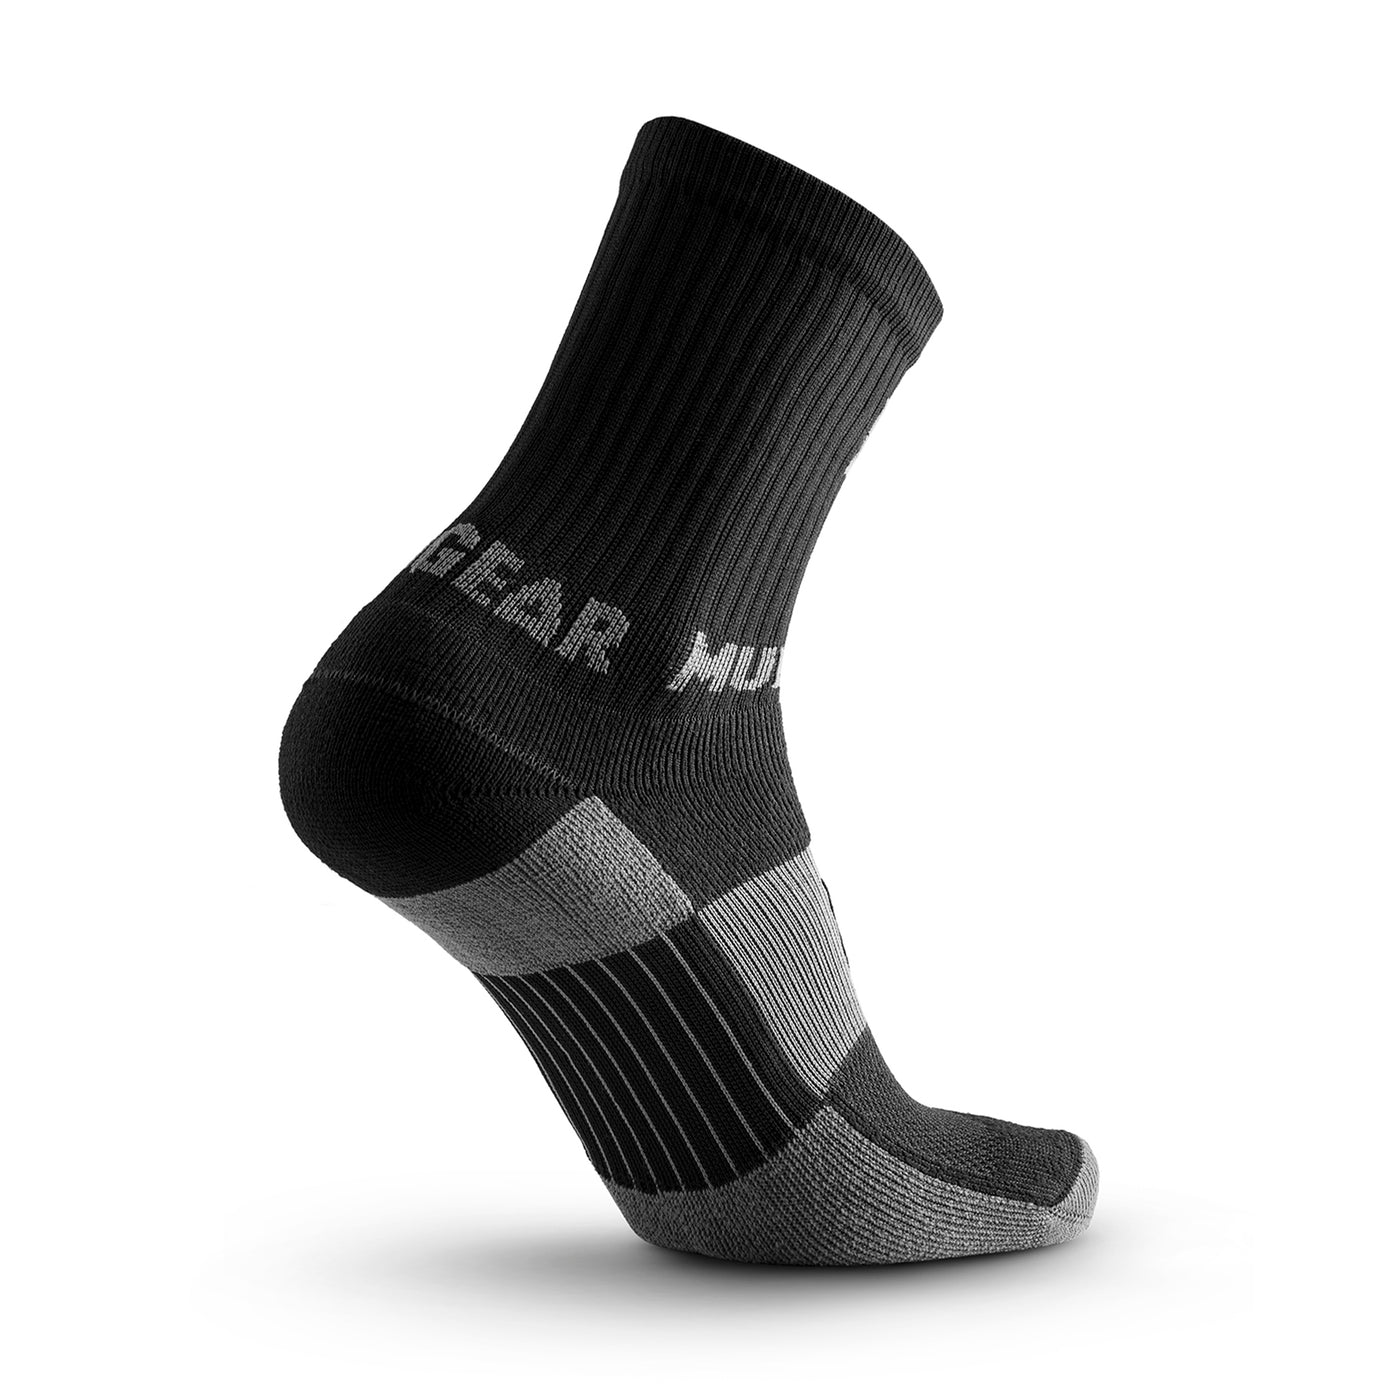 Performance Hiking/Trekking Sock - Black/Gray (2 Pair Pack)